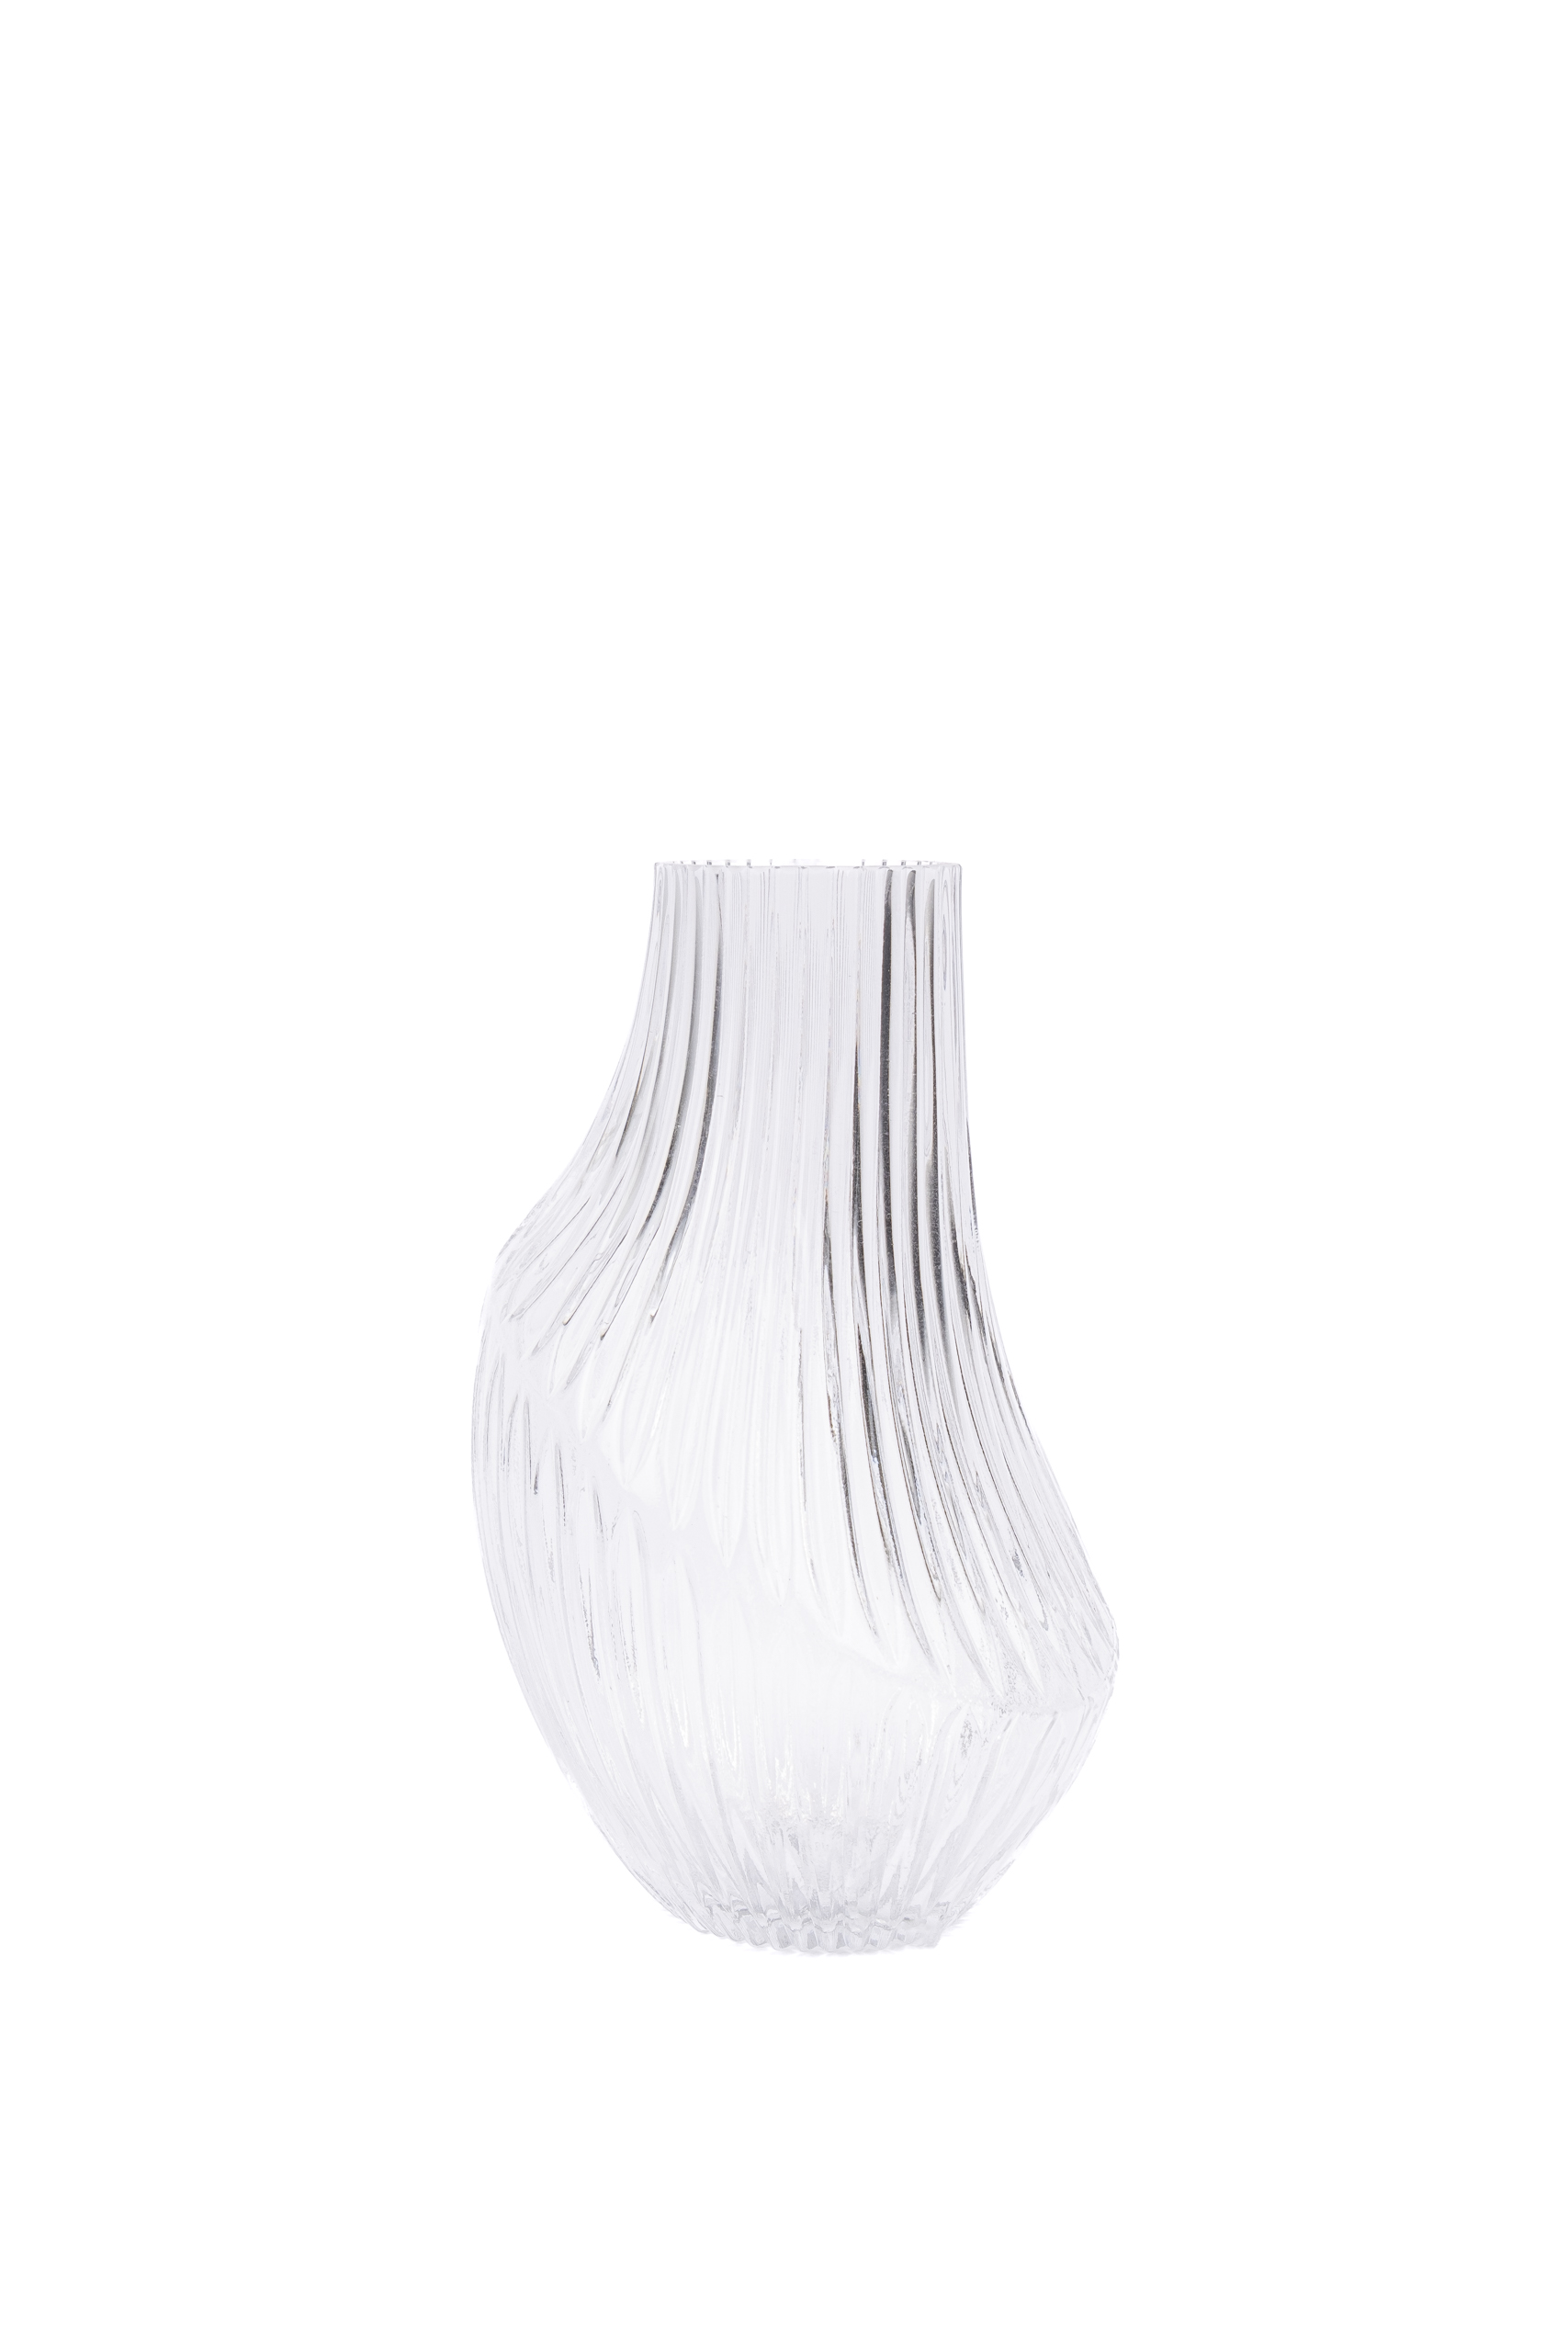 Joca Home Concept 25cm Glass Sculpture Vase